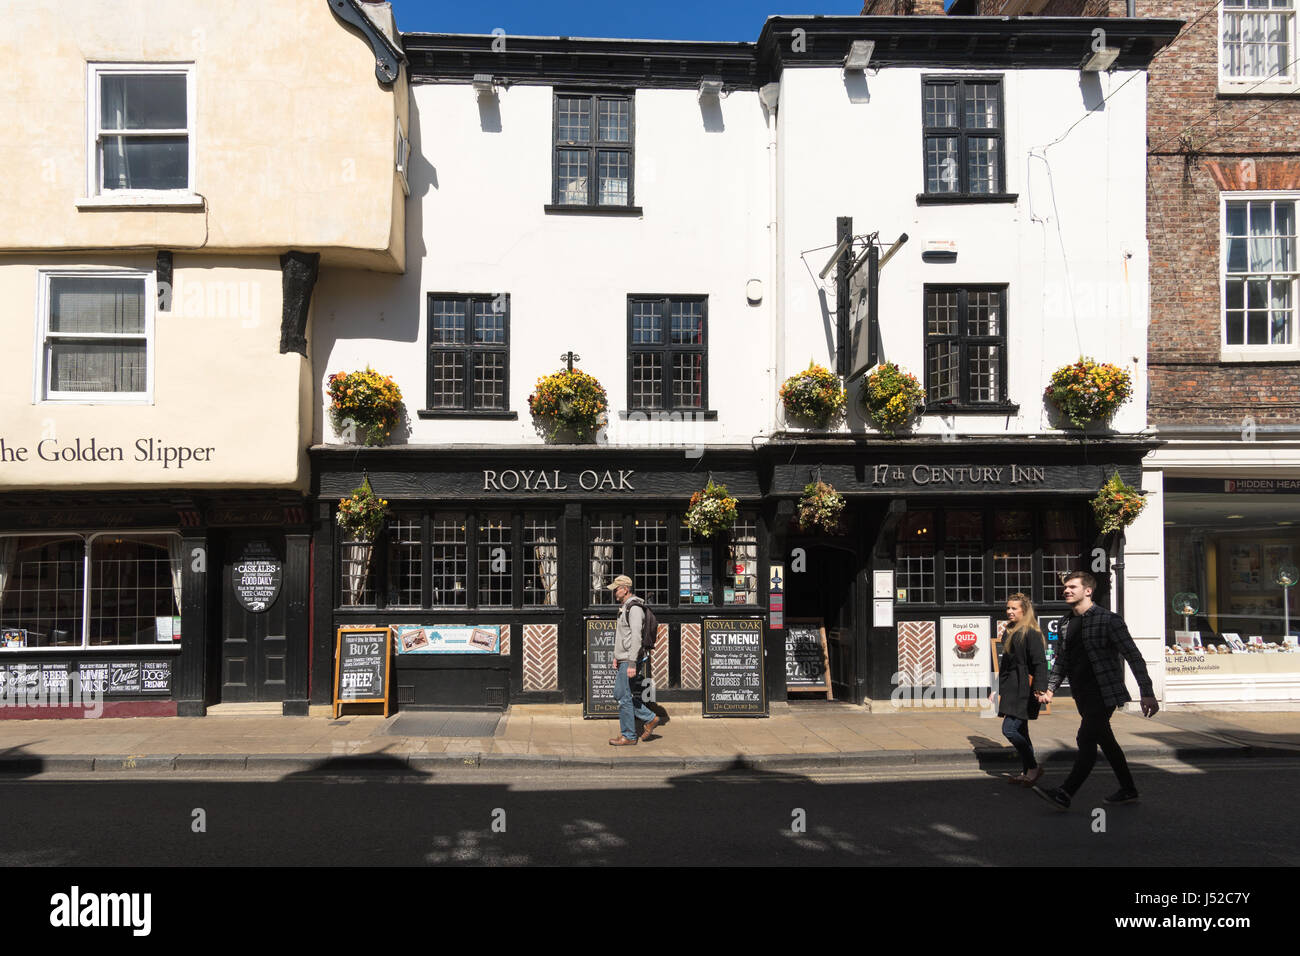 The Royal Oak pub and restaurant in Goodramgate, York, a 17th century Inn, England, UK Stock Photo